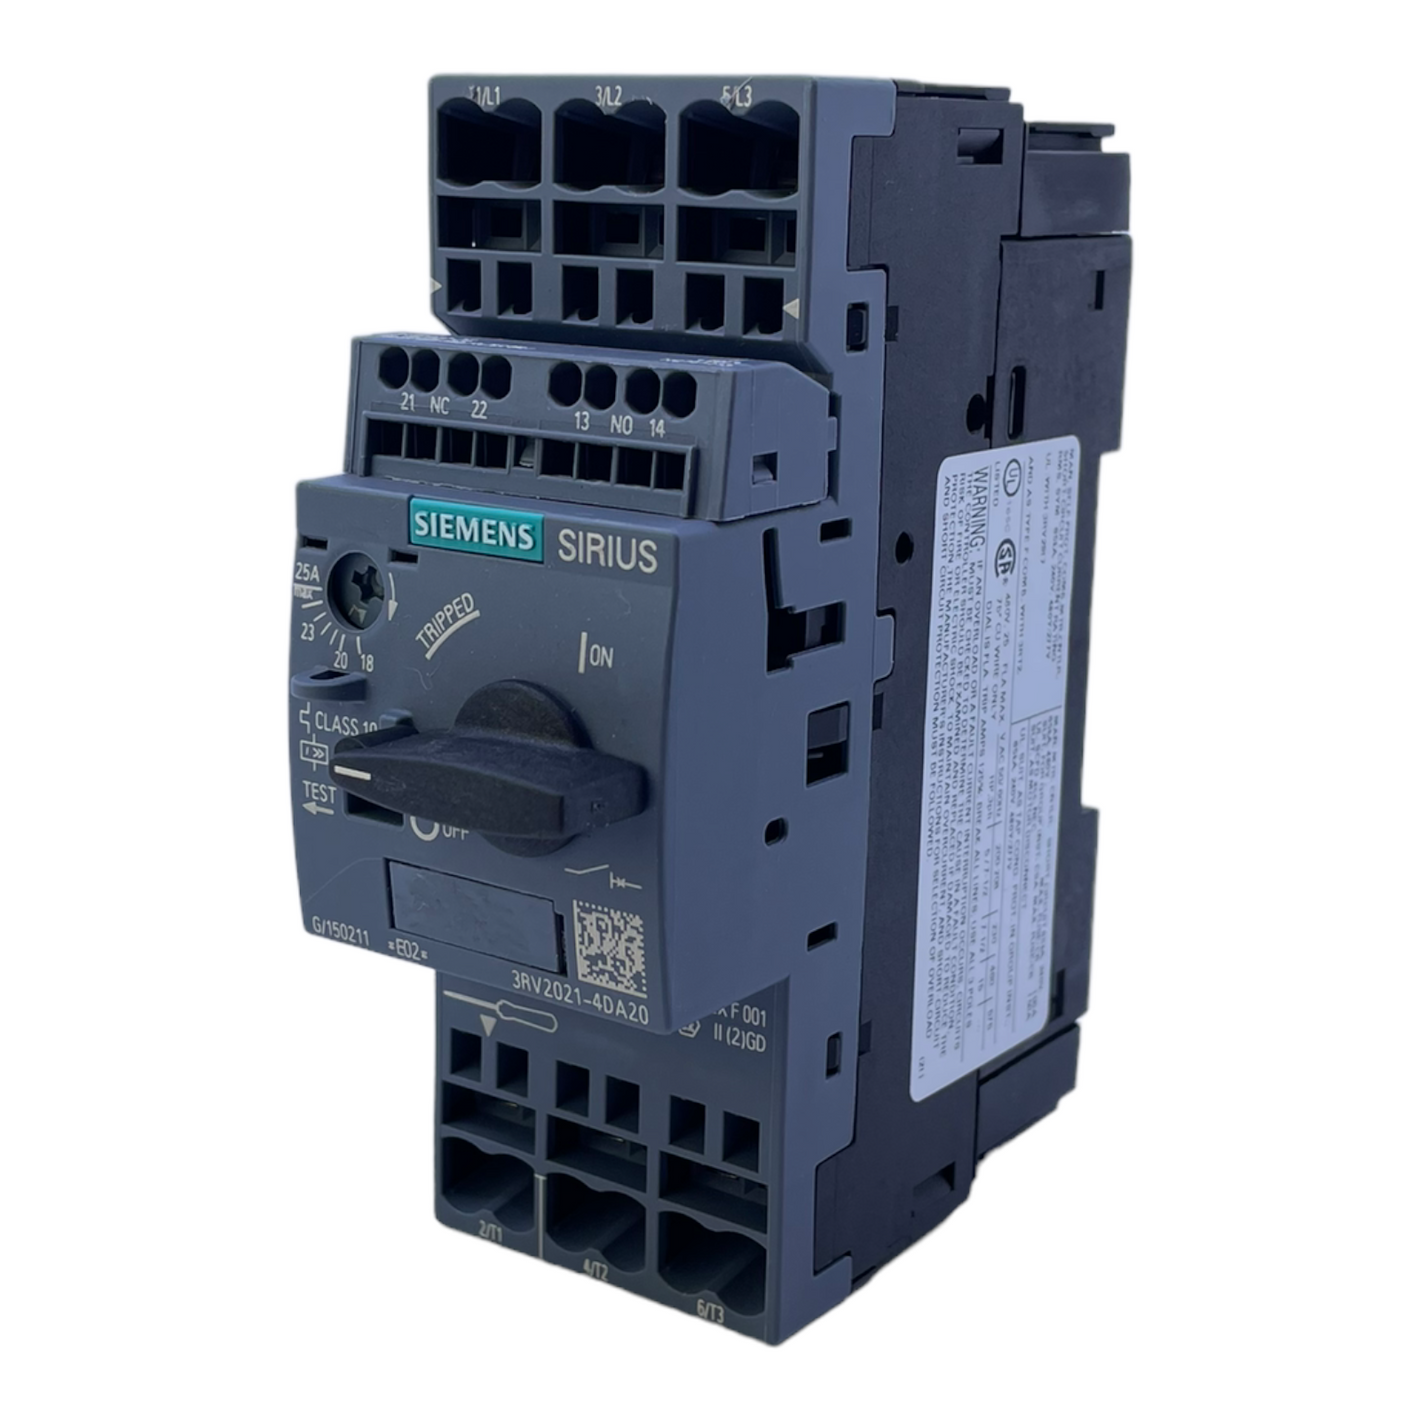 Siemens 3RV2021-4DA20 circuit breaker 